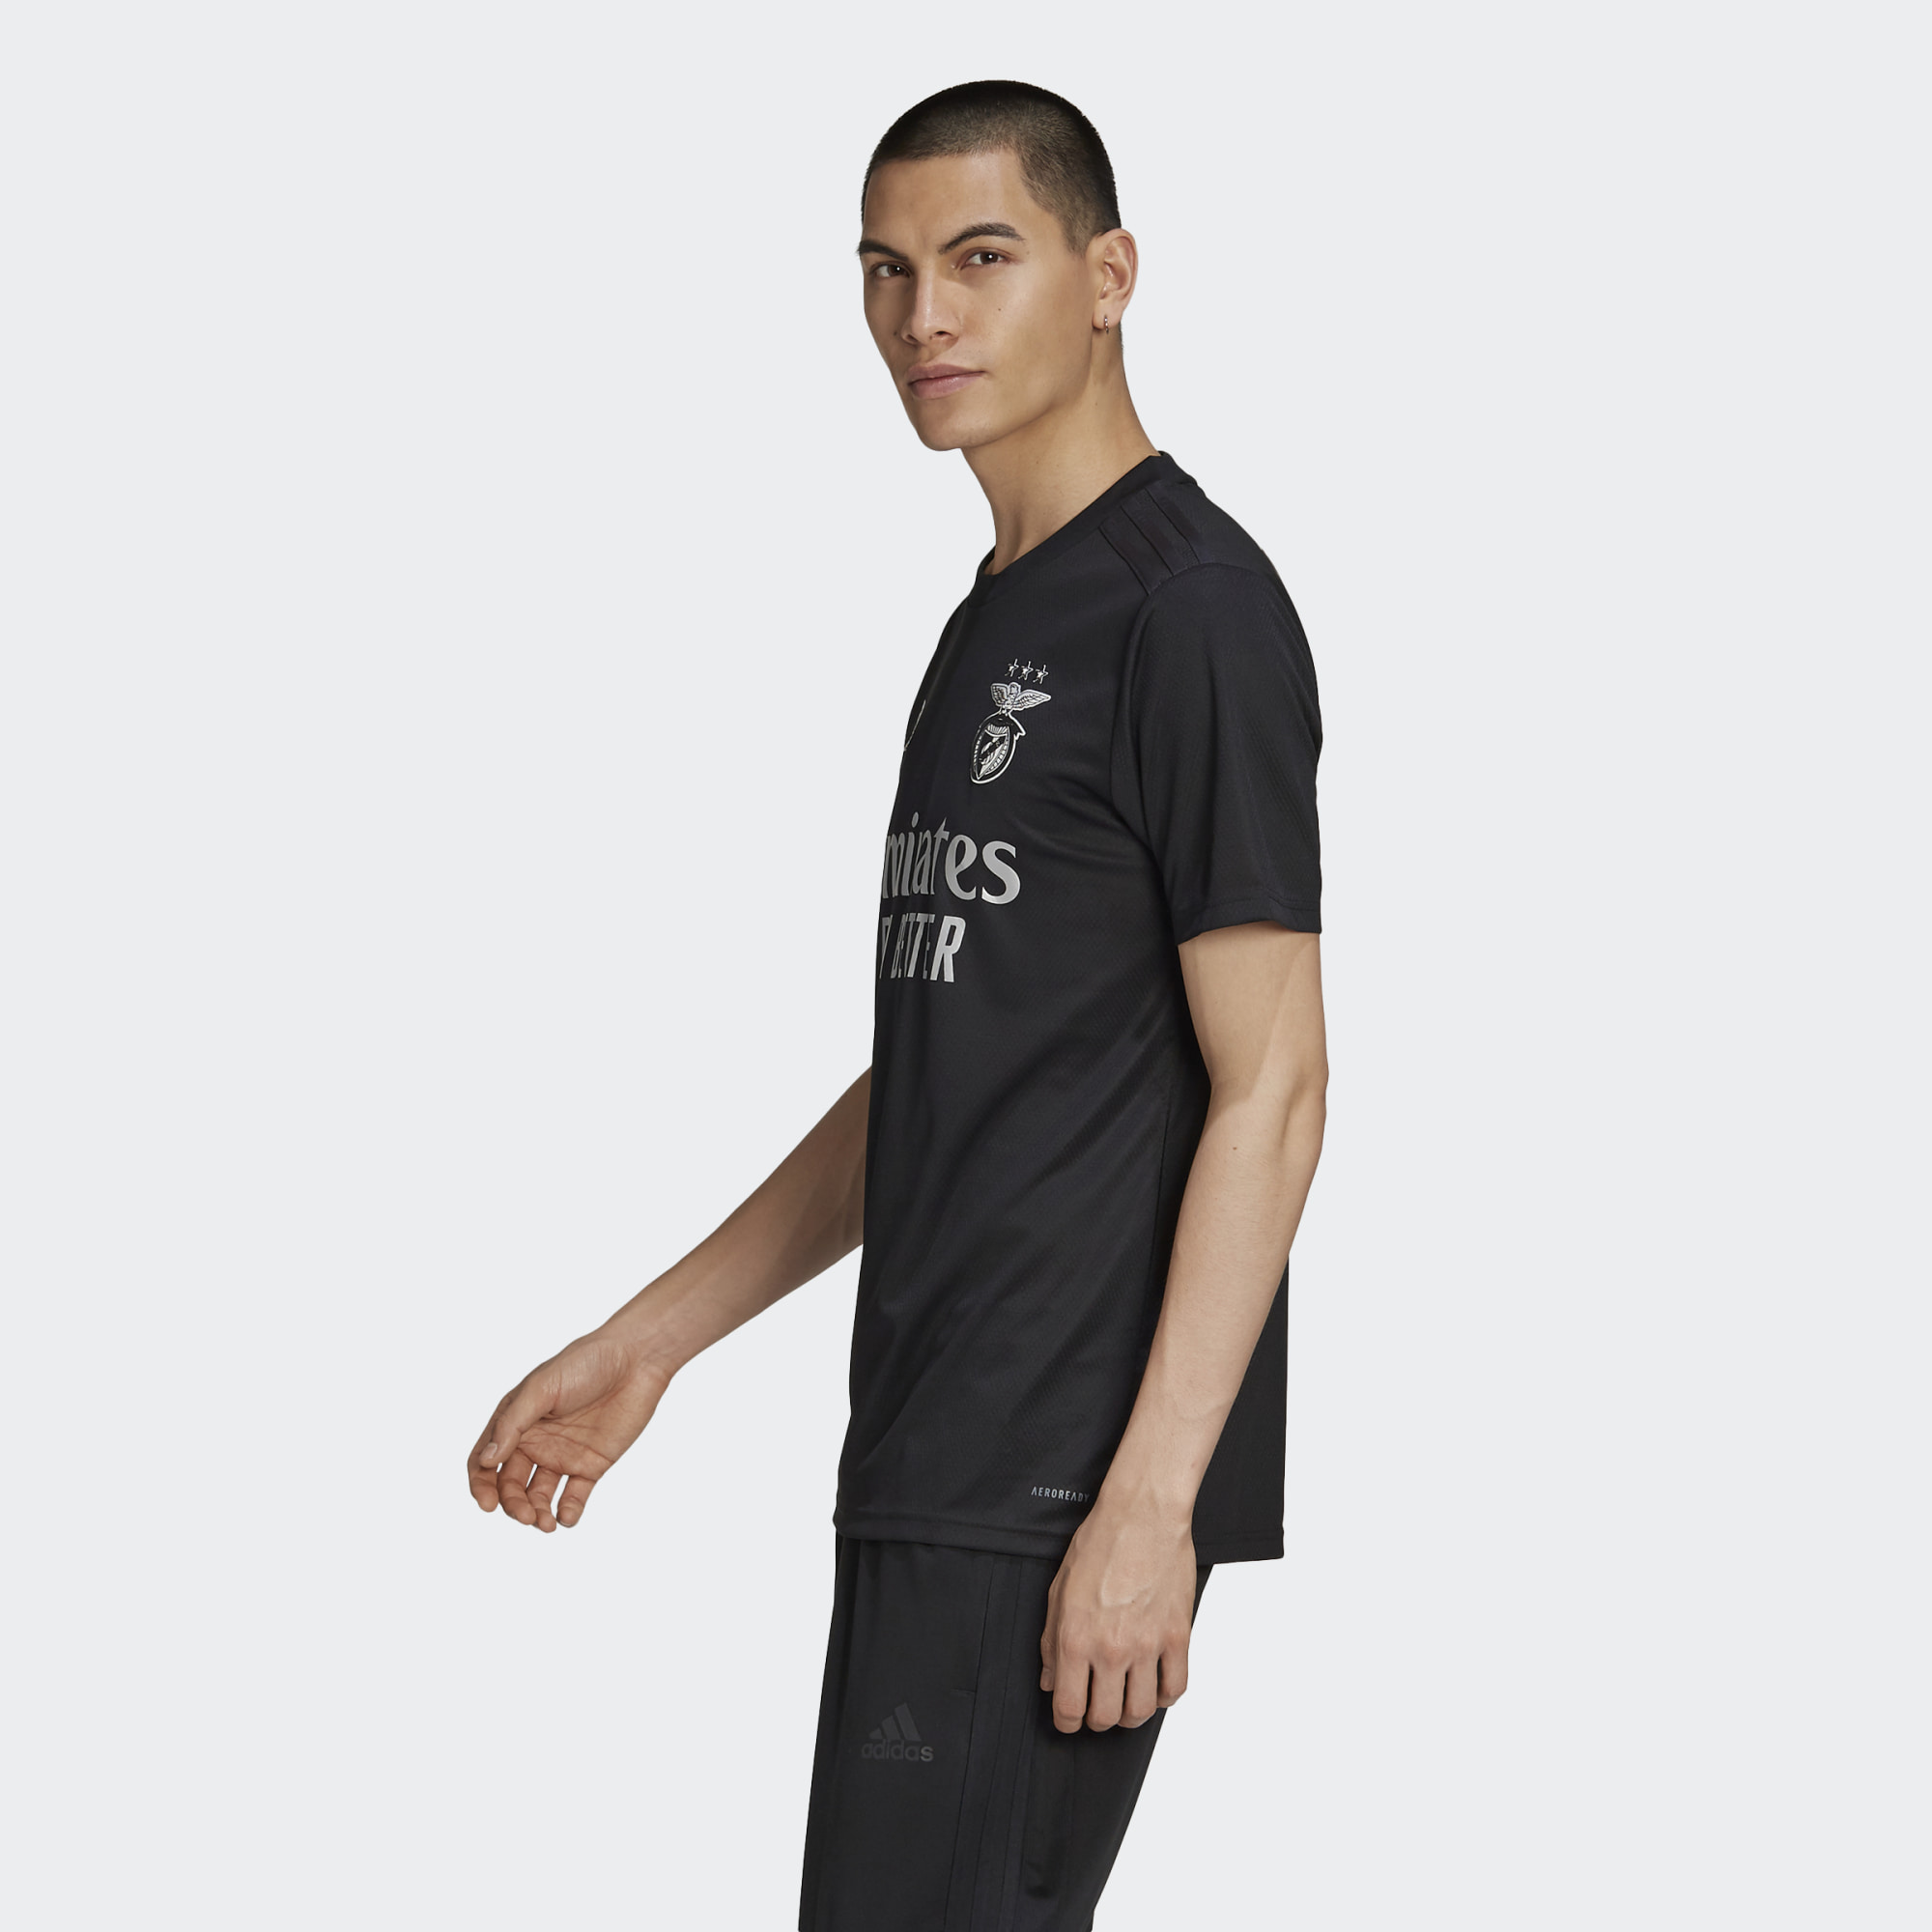 Benfica 2020-21 Adidas Away Kit | 20/21 Kits | Football shirt blog